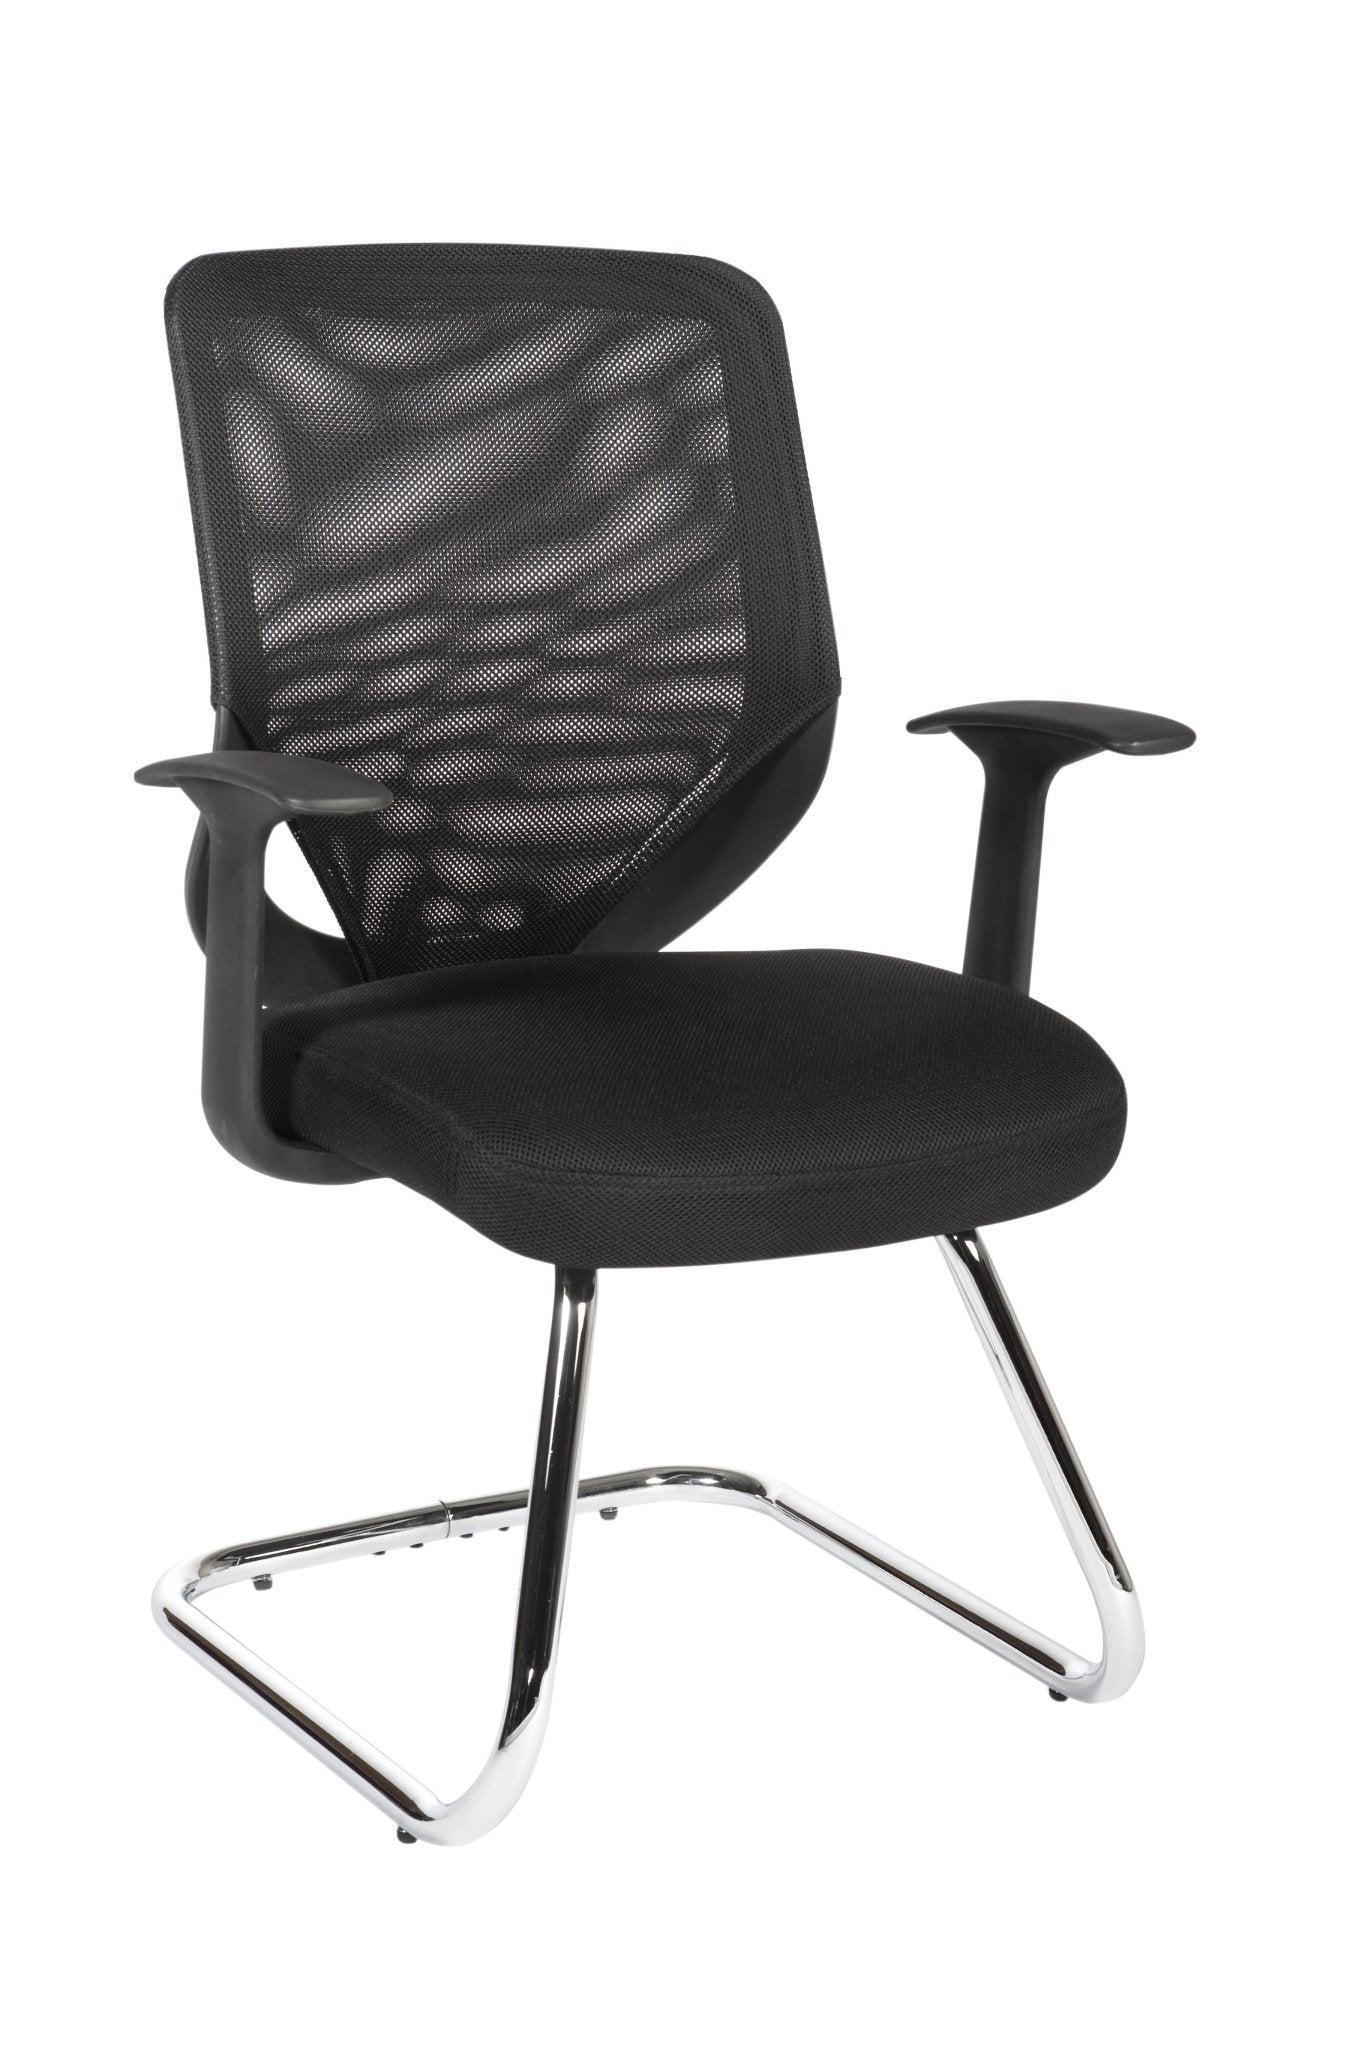 Nova mesh visitor chair - crimblefest furniture - image 1